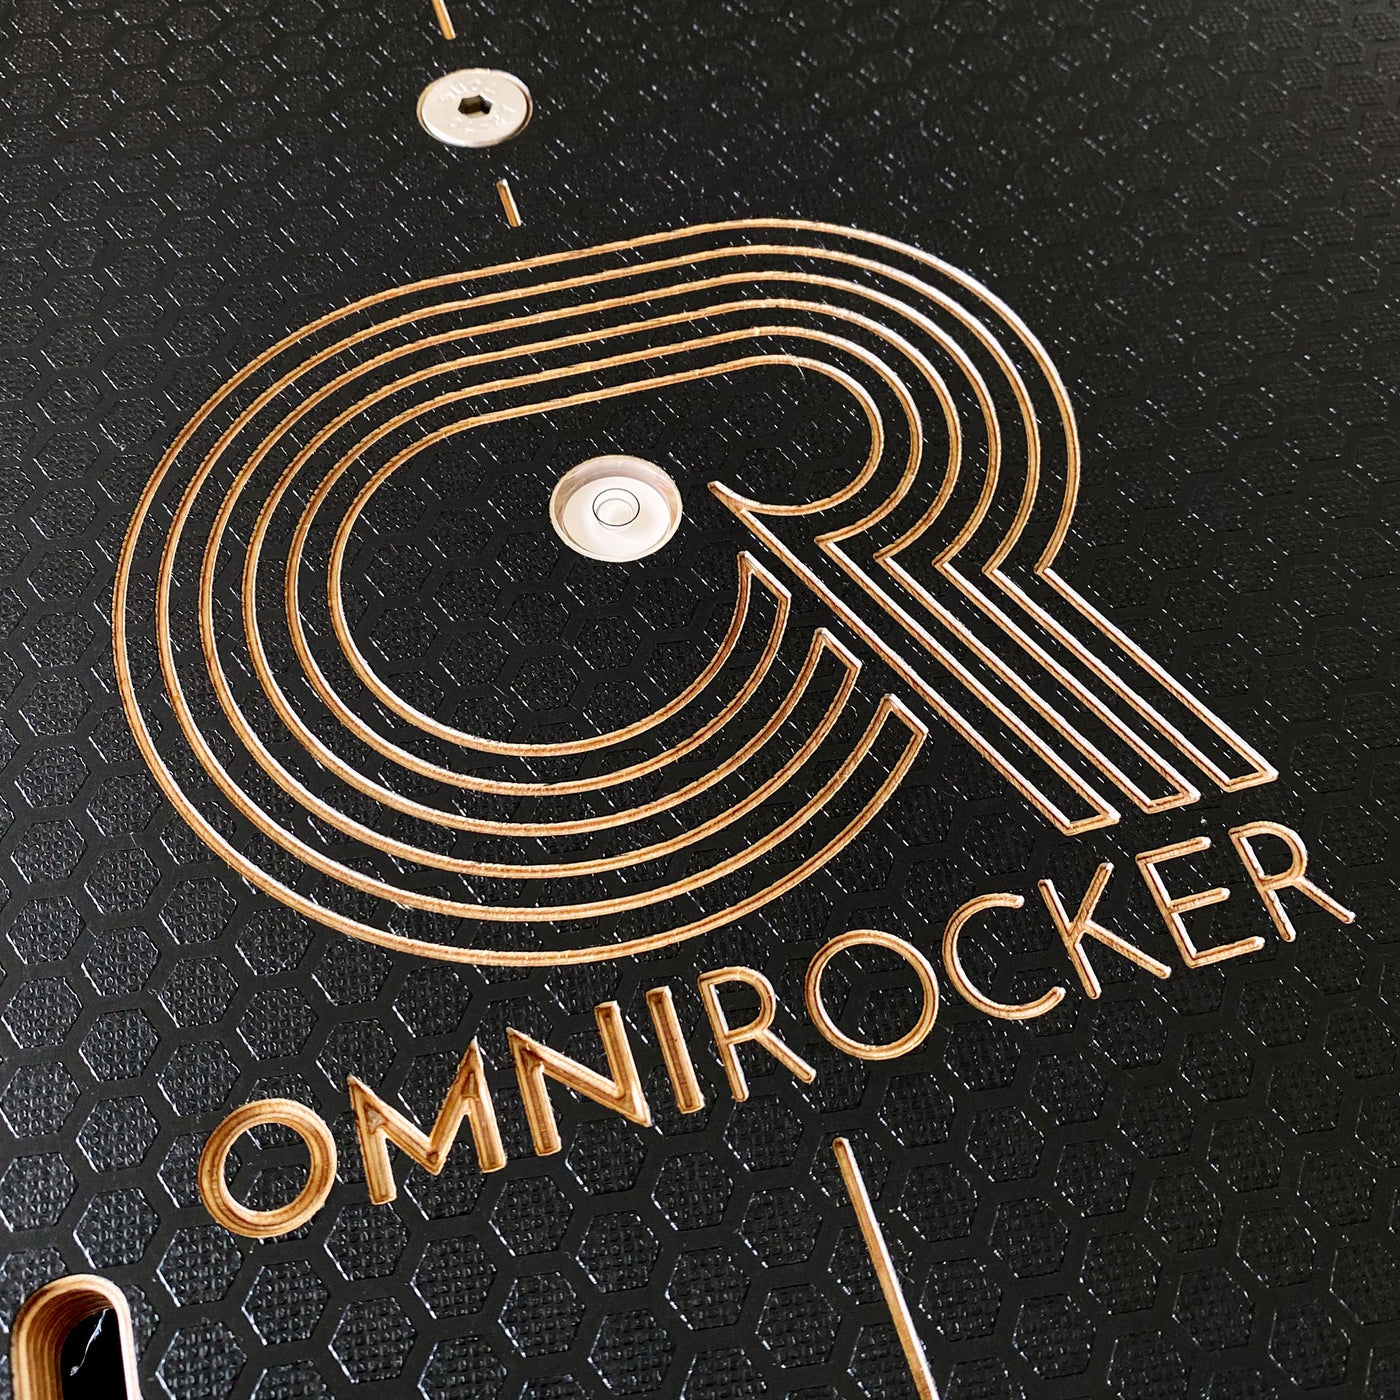 Omnirocker Lite rocker plate for Turbo Trainers. Logo detail, Stealth finish.